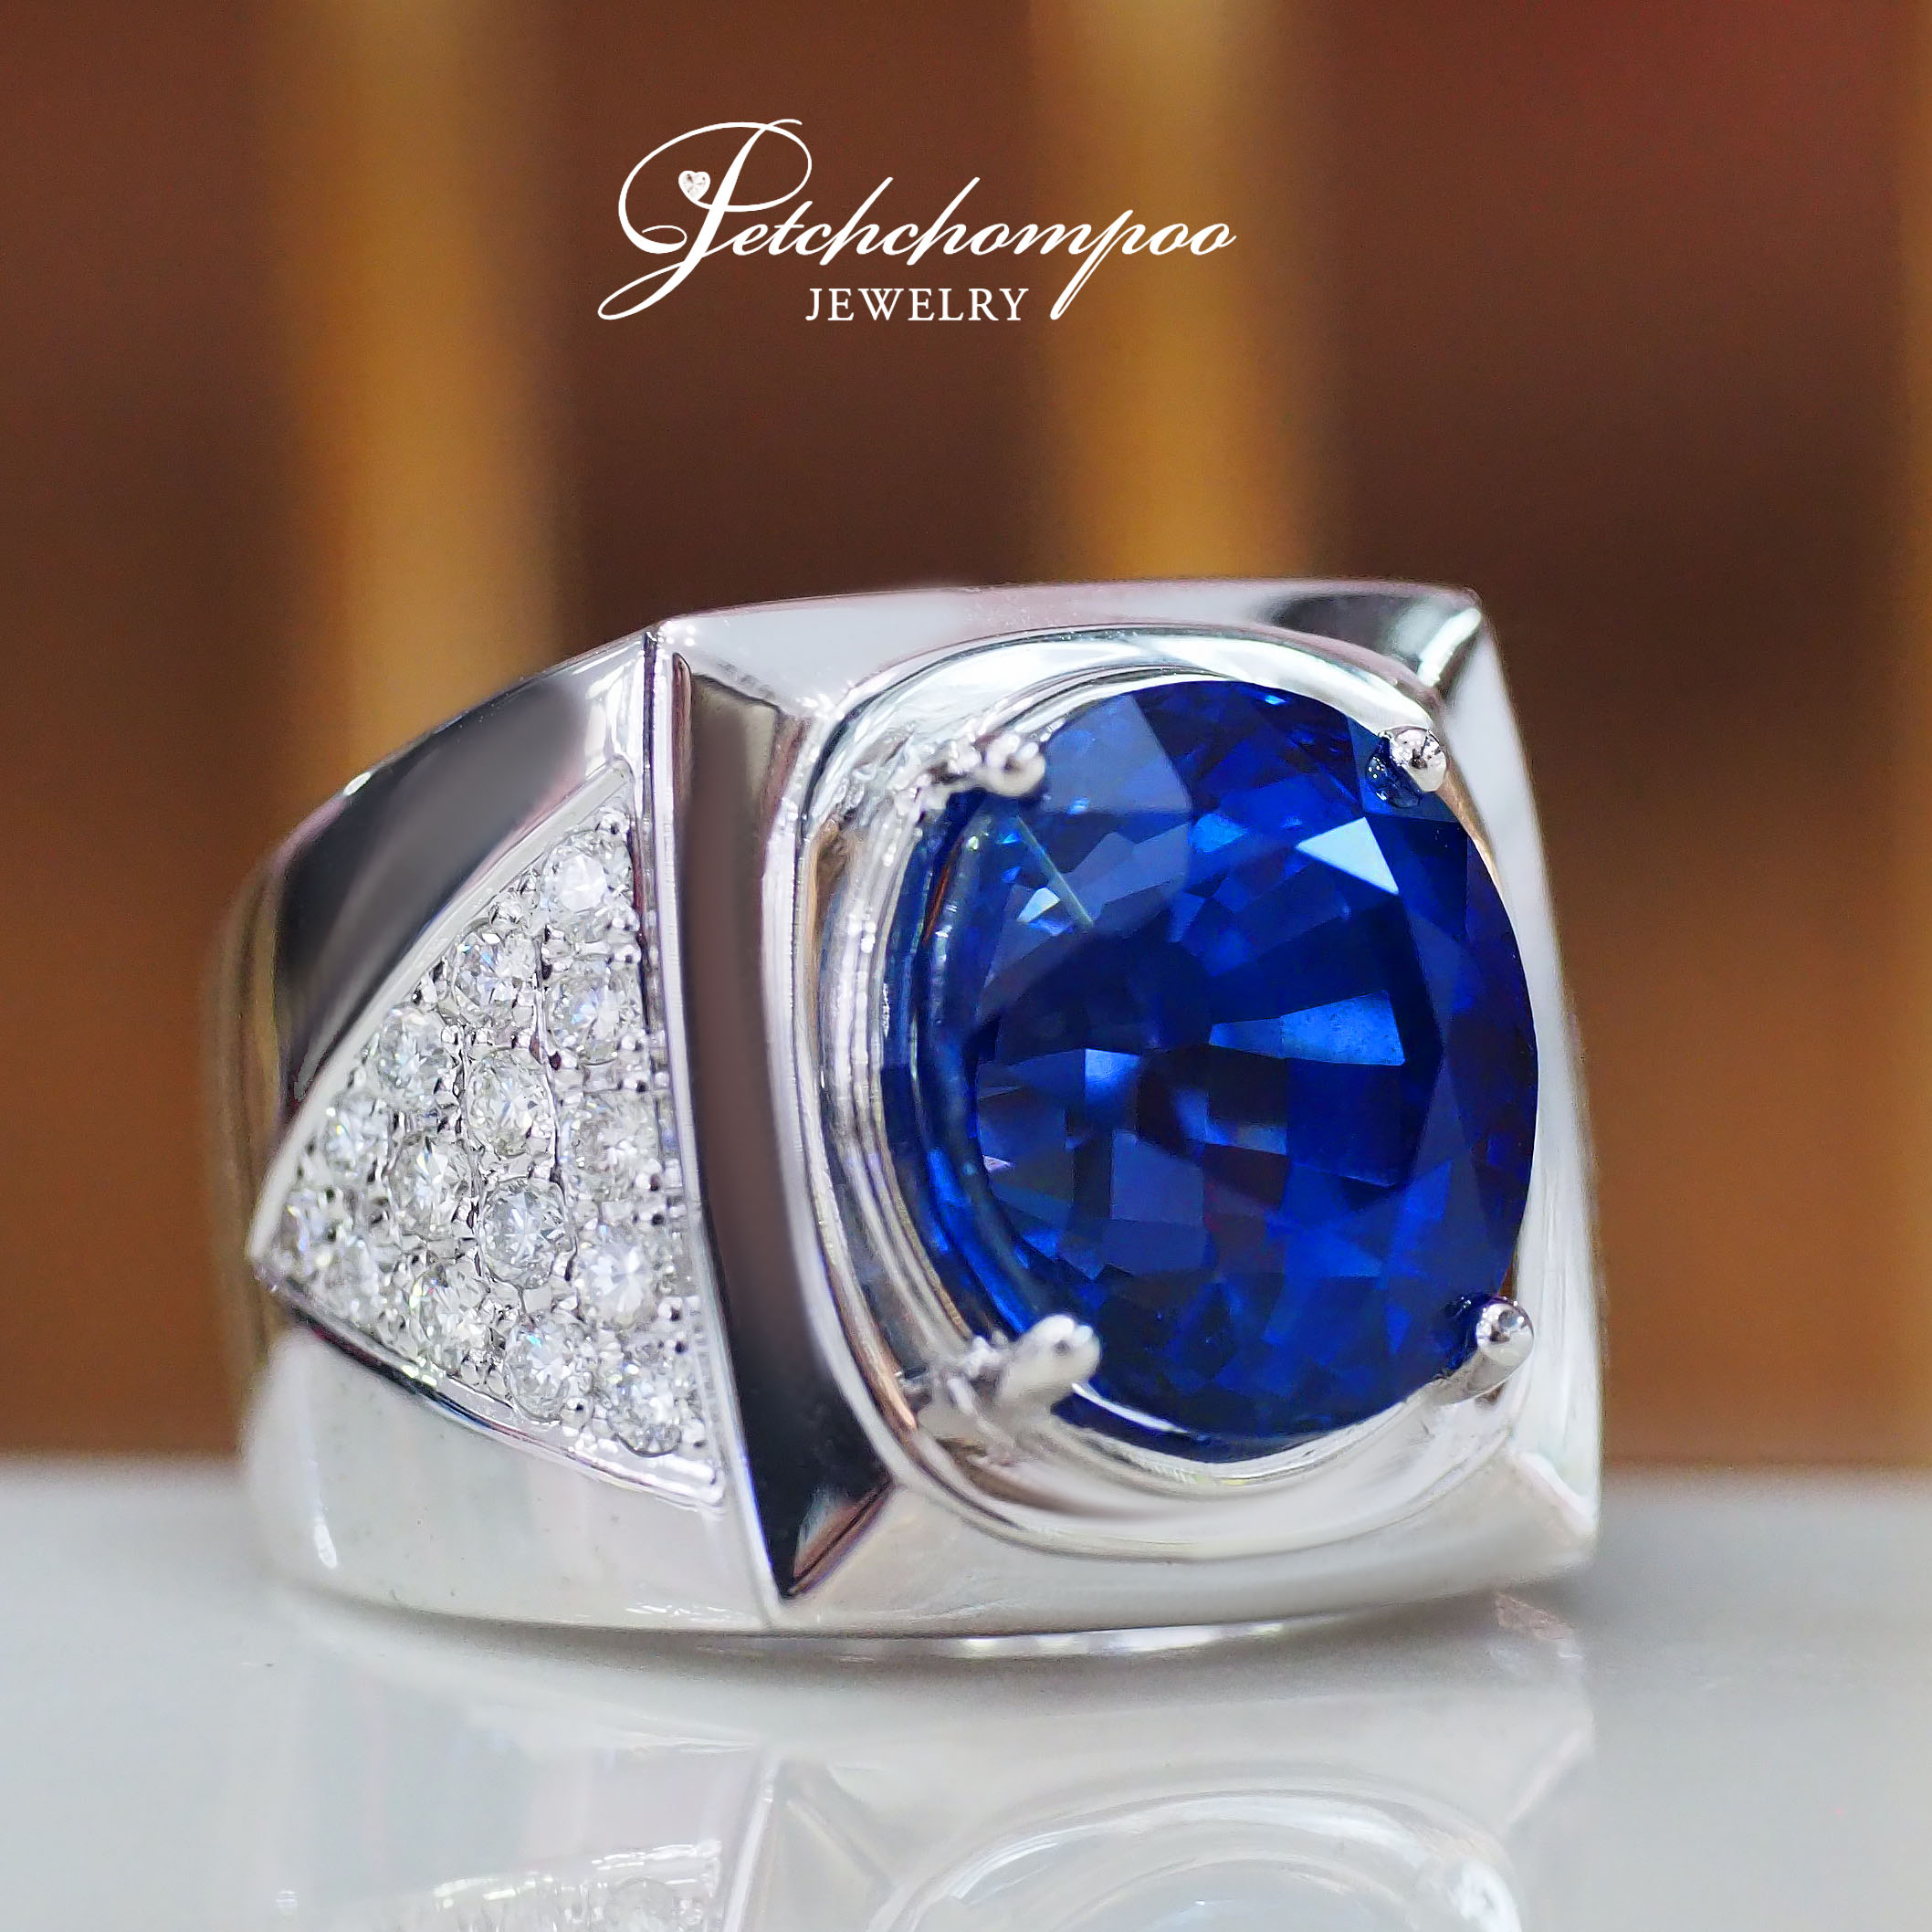 [26984] Ceylon men's sapphire ring Corn flower Blue 10.20 ct. AIGS certificate with diamonds.  1,590,000 